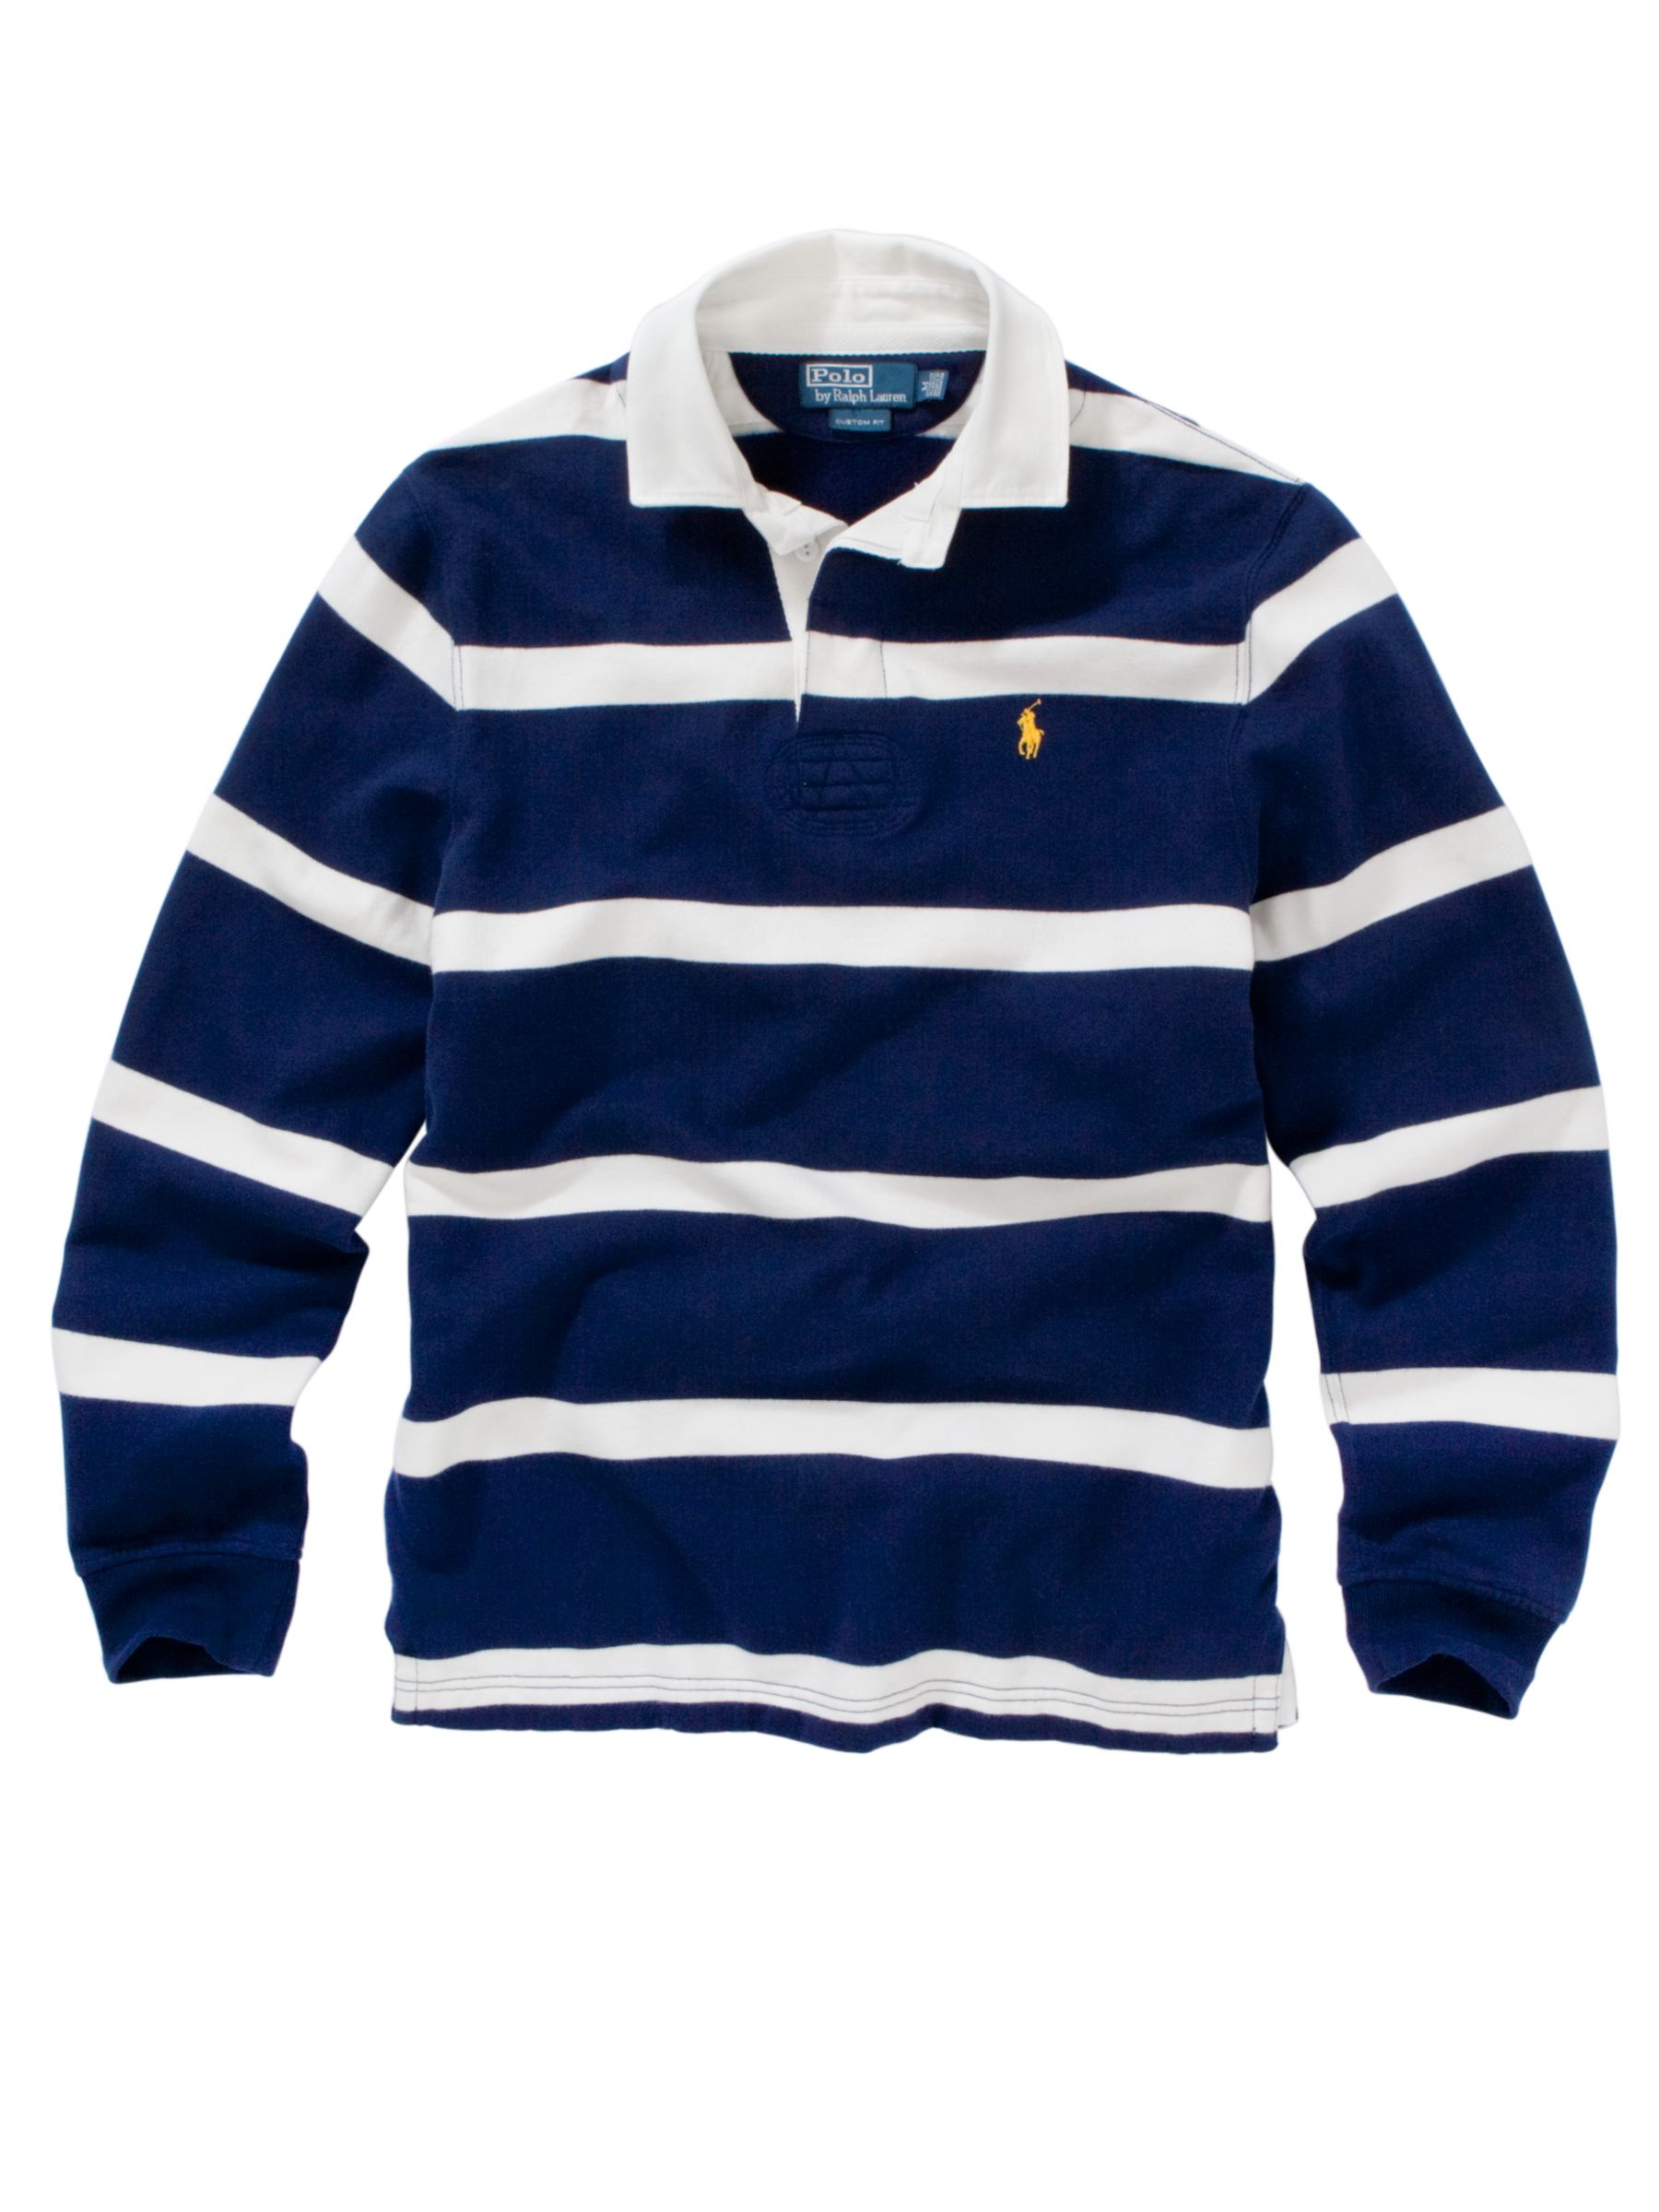 Polo Ralph Lauren Stripe Rugby Shirt, Navy/white